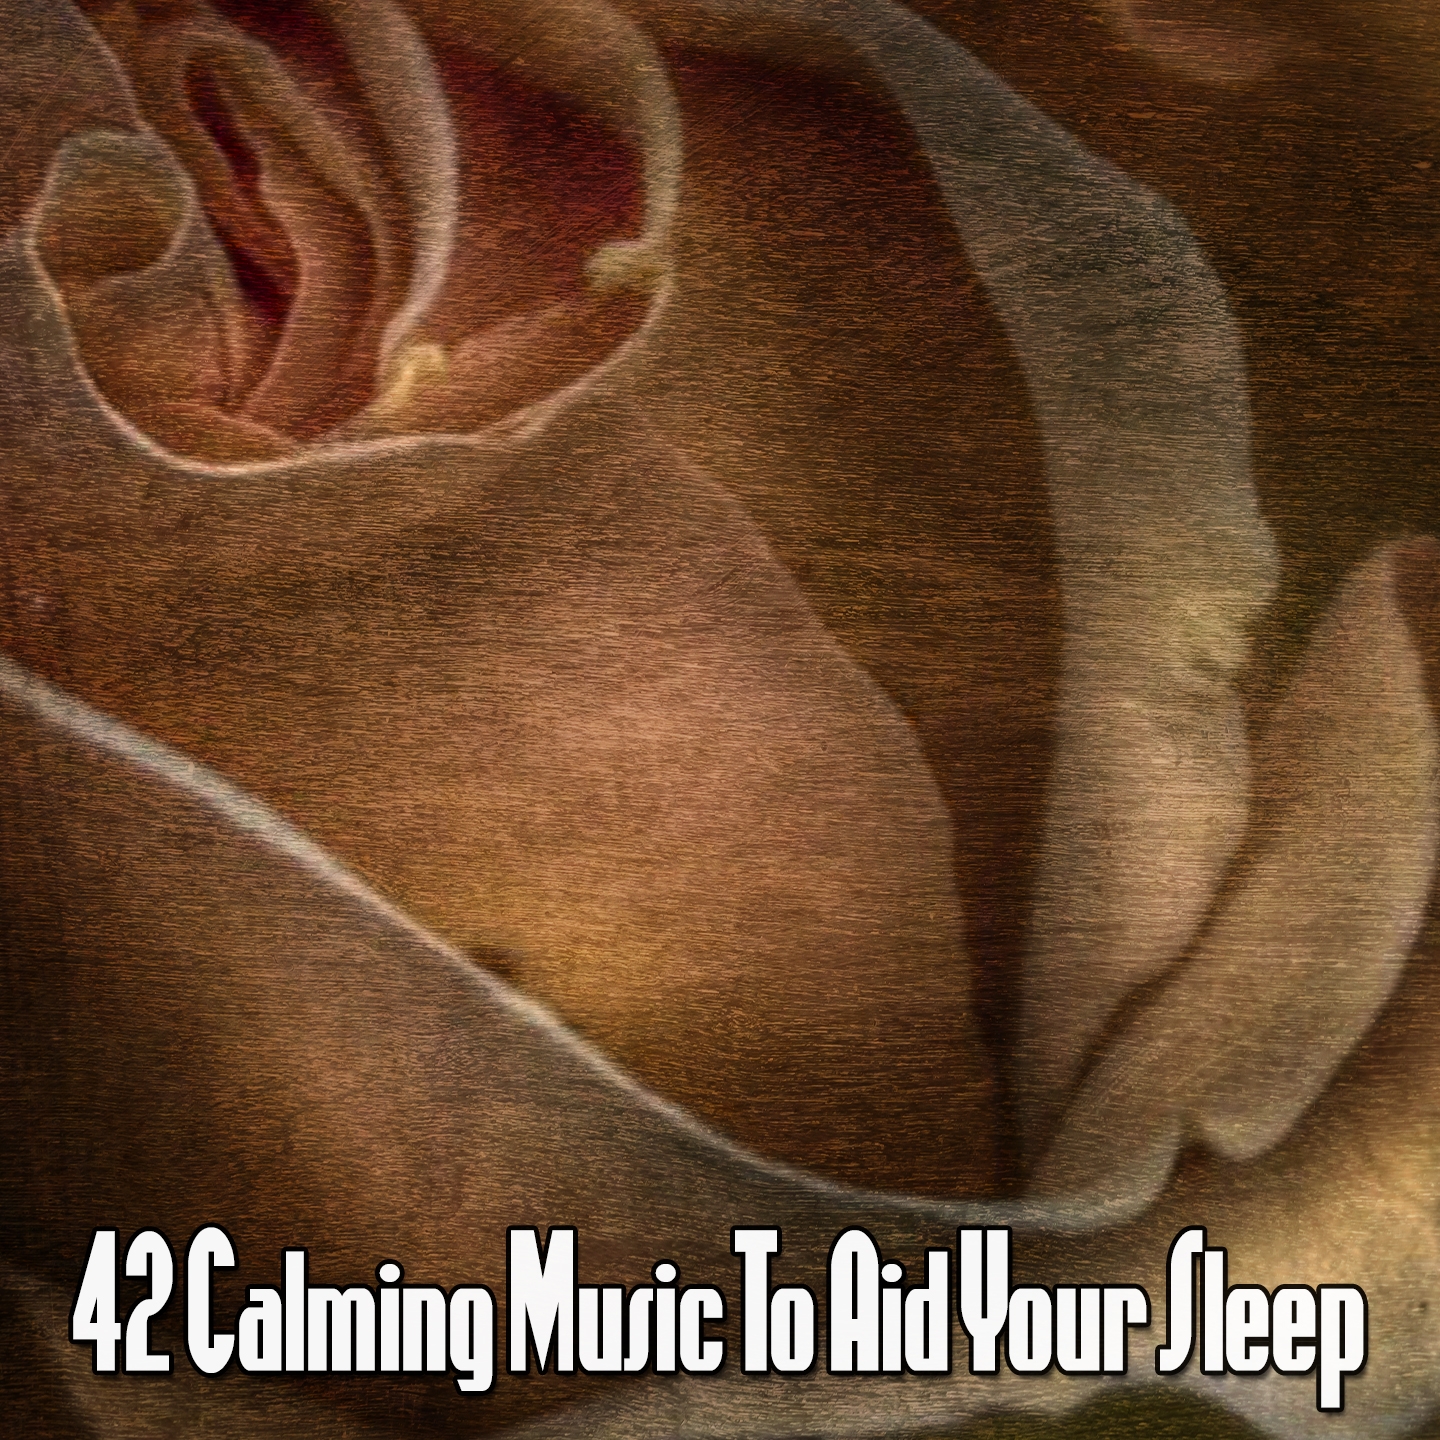 42 Calming Music To Aid Your Sleep